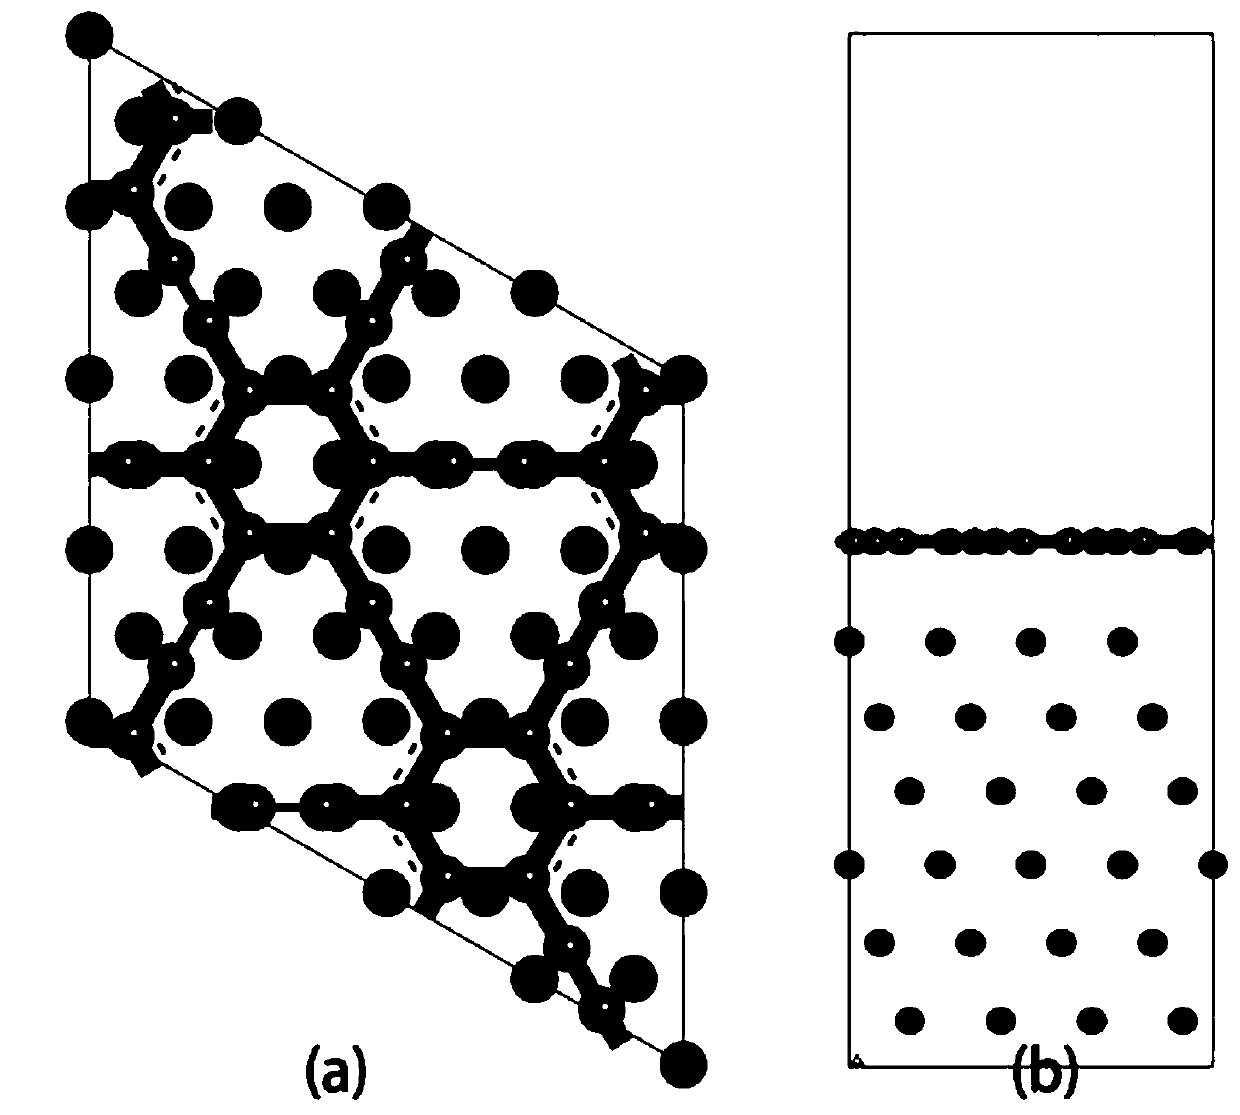 Metal/gamma-Graphene composite model and method for modifying electronic performance of gamma-Graphene